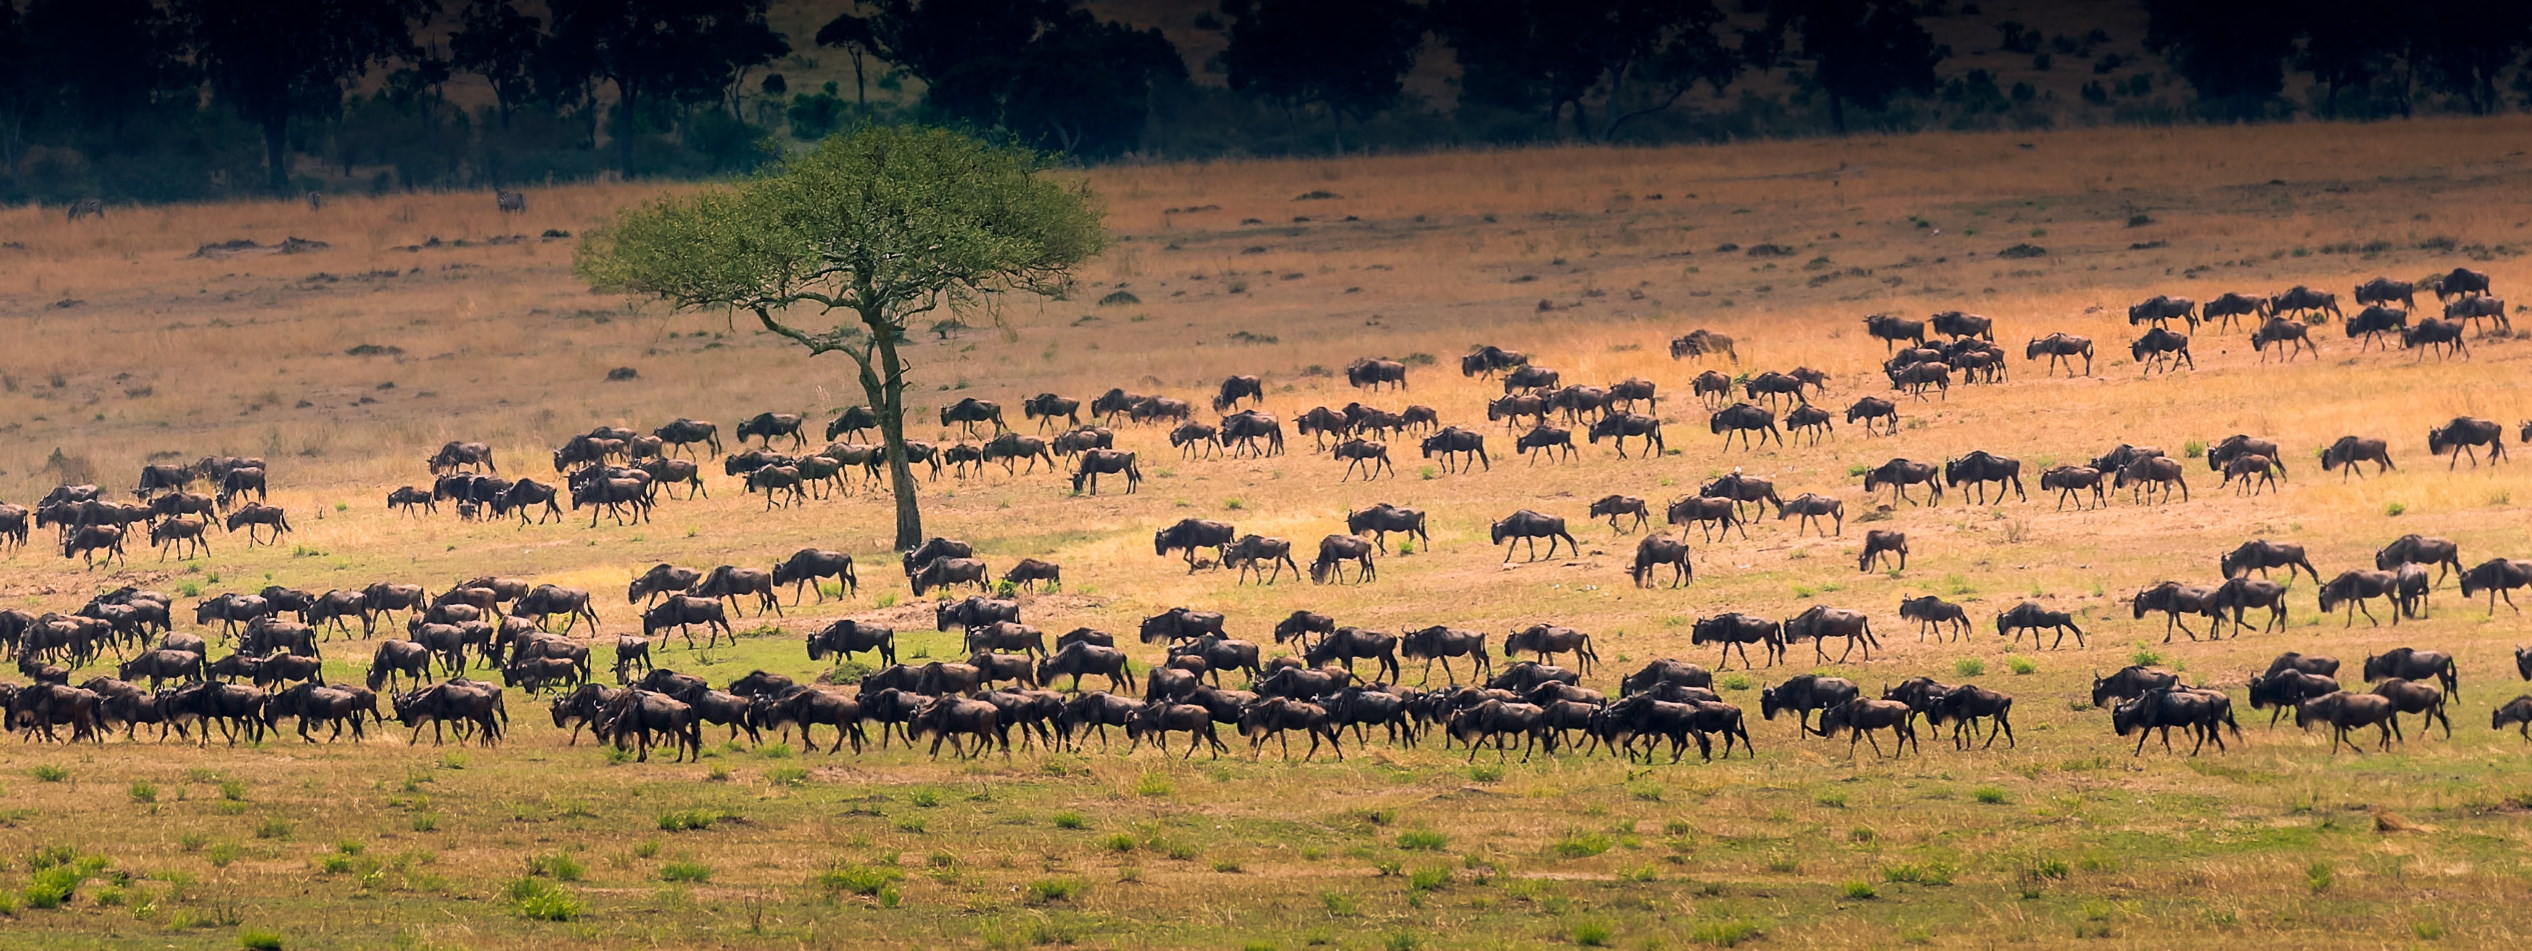 Wildebeest grazing